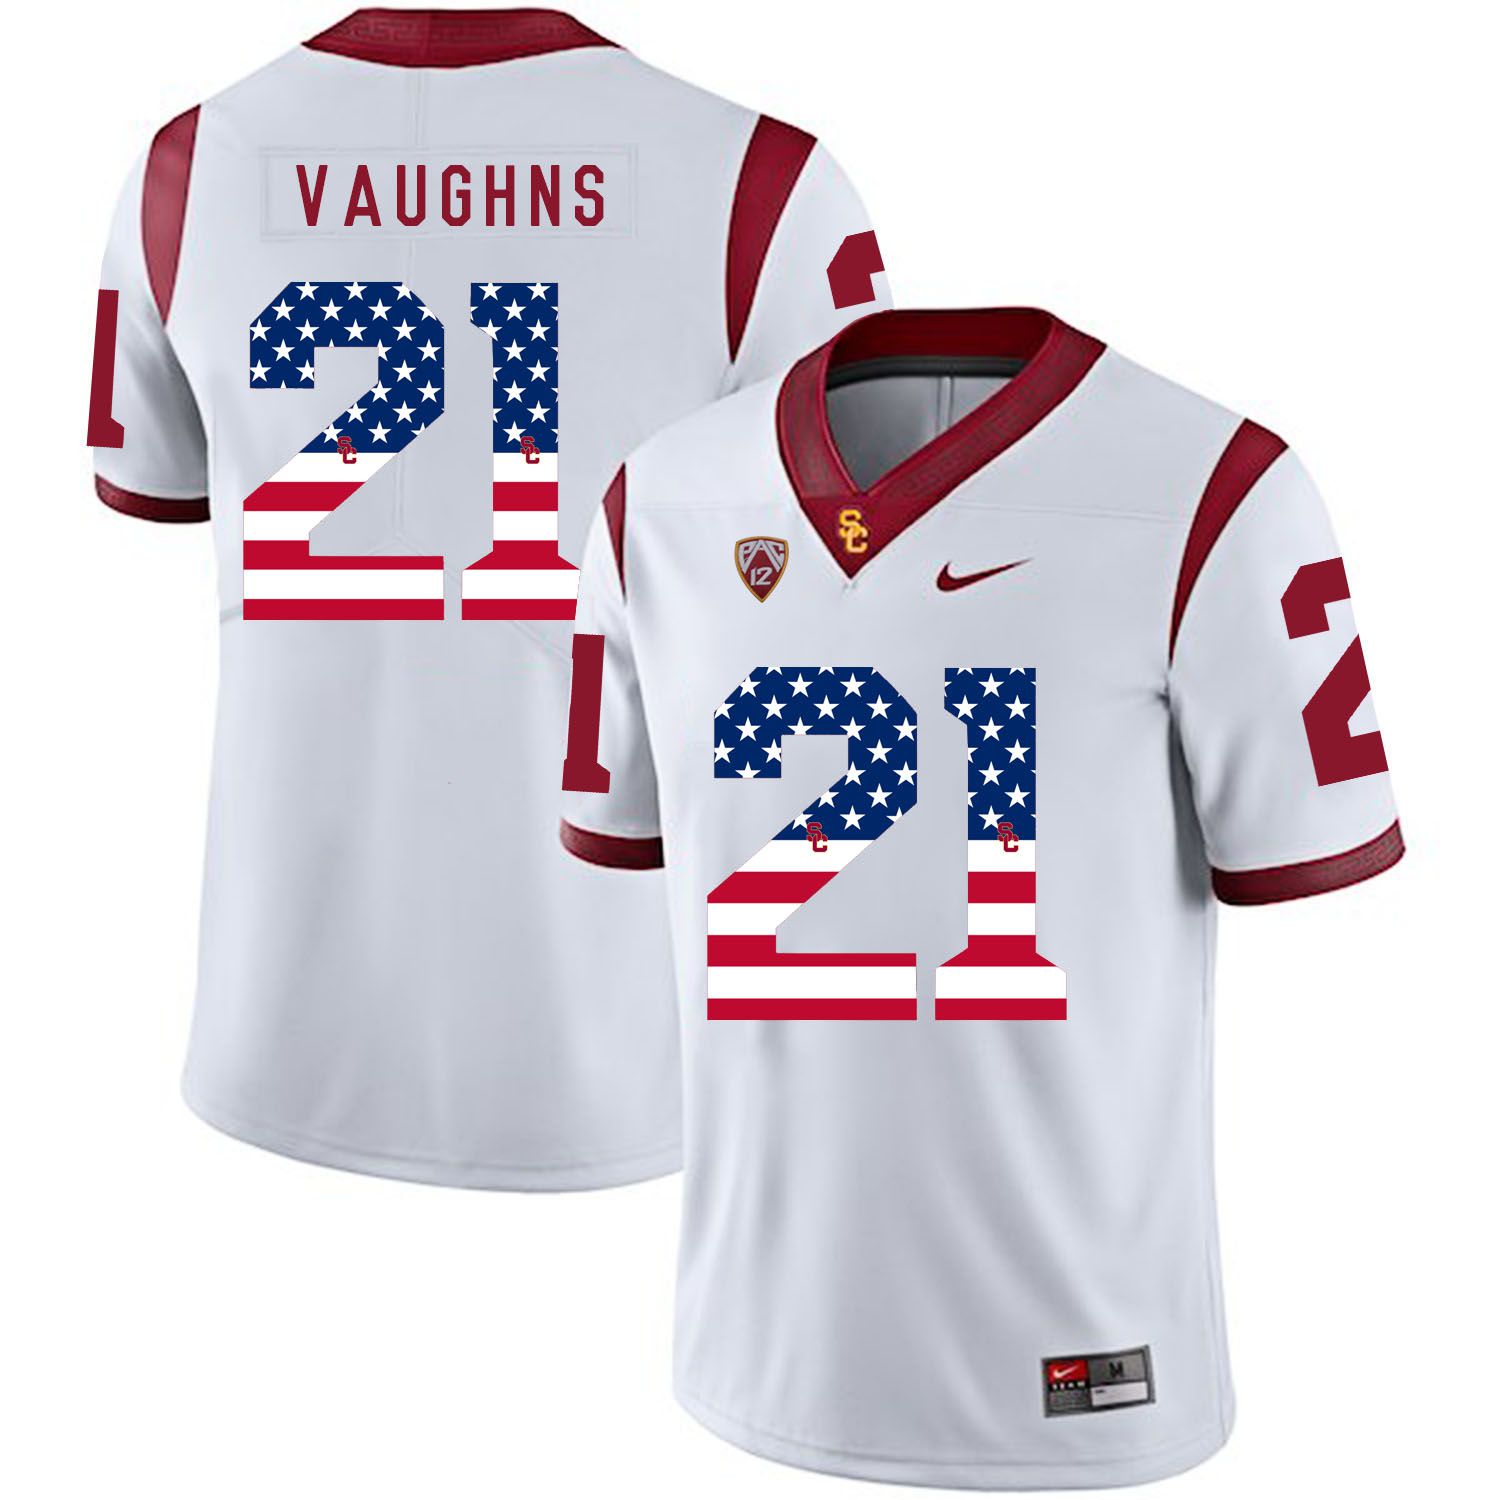 Men USC Trojans #21 Vaughns White Flag Customized NCAA Jerseys